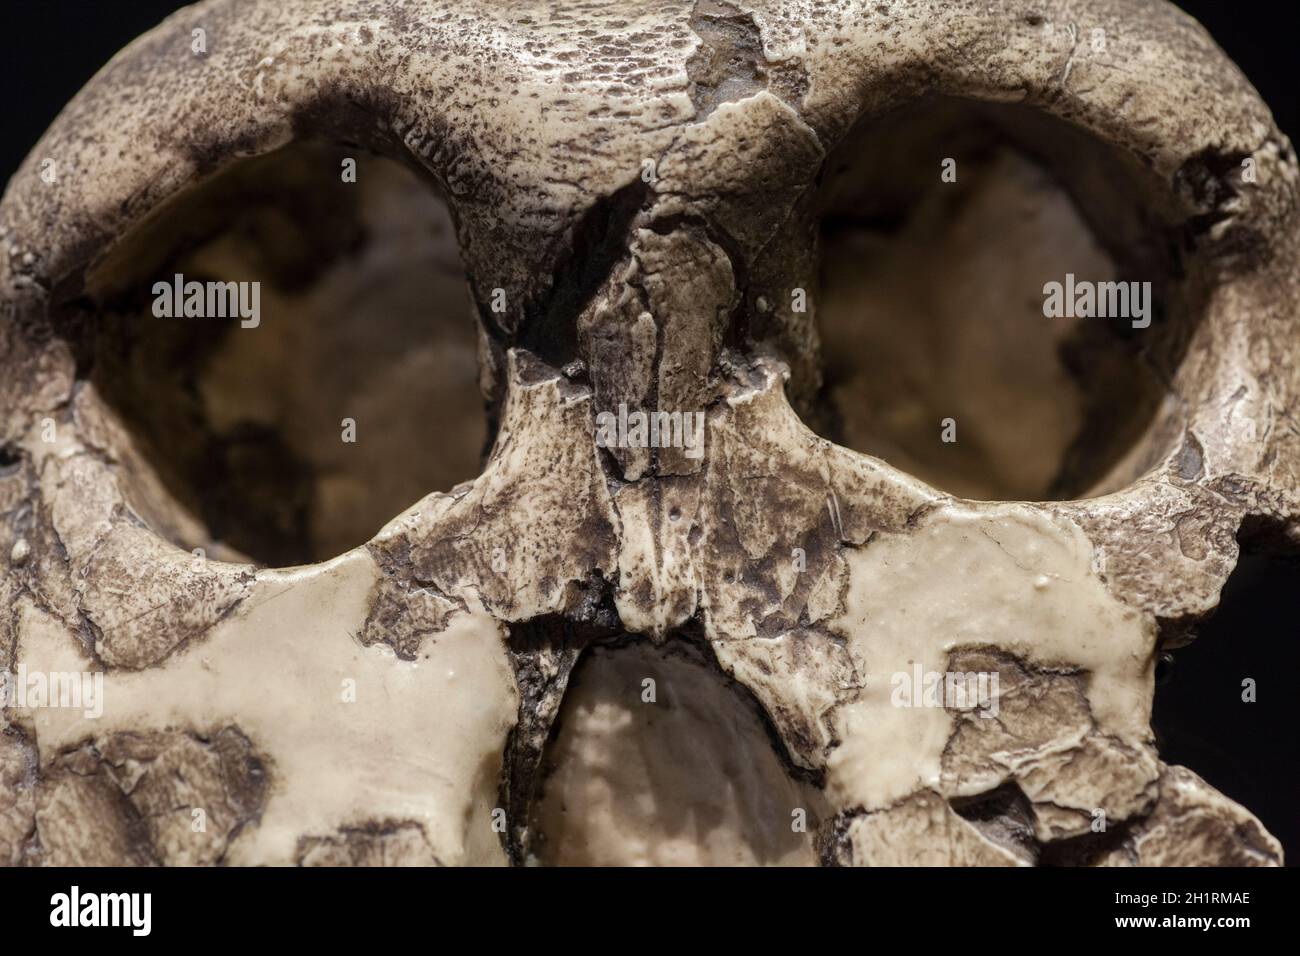 Madrid, Spain - Marh 6th 2021: Skull of Paranthropus boisei or Australopithecus boisei. Closeup. MAN, Spain Stock Photo